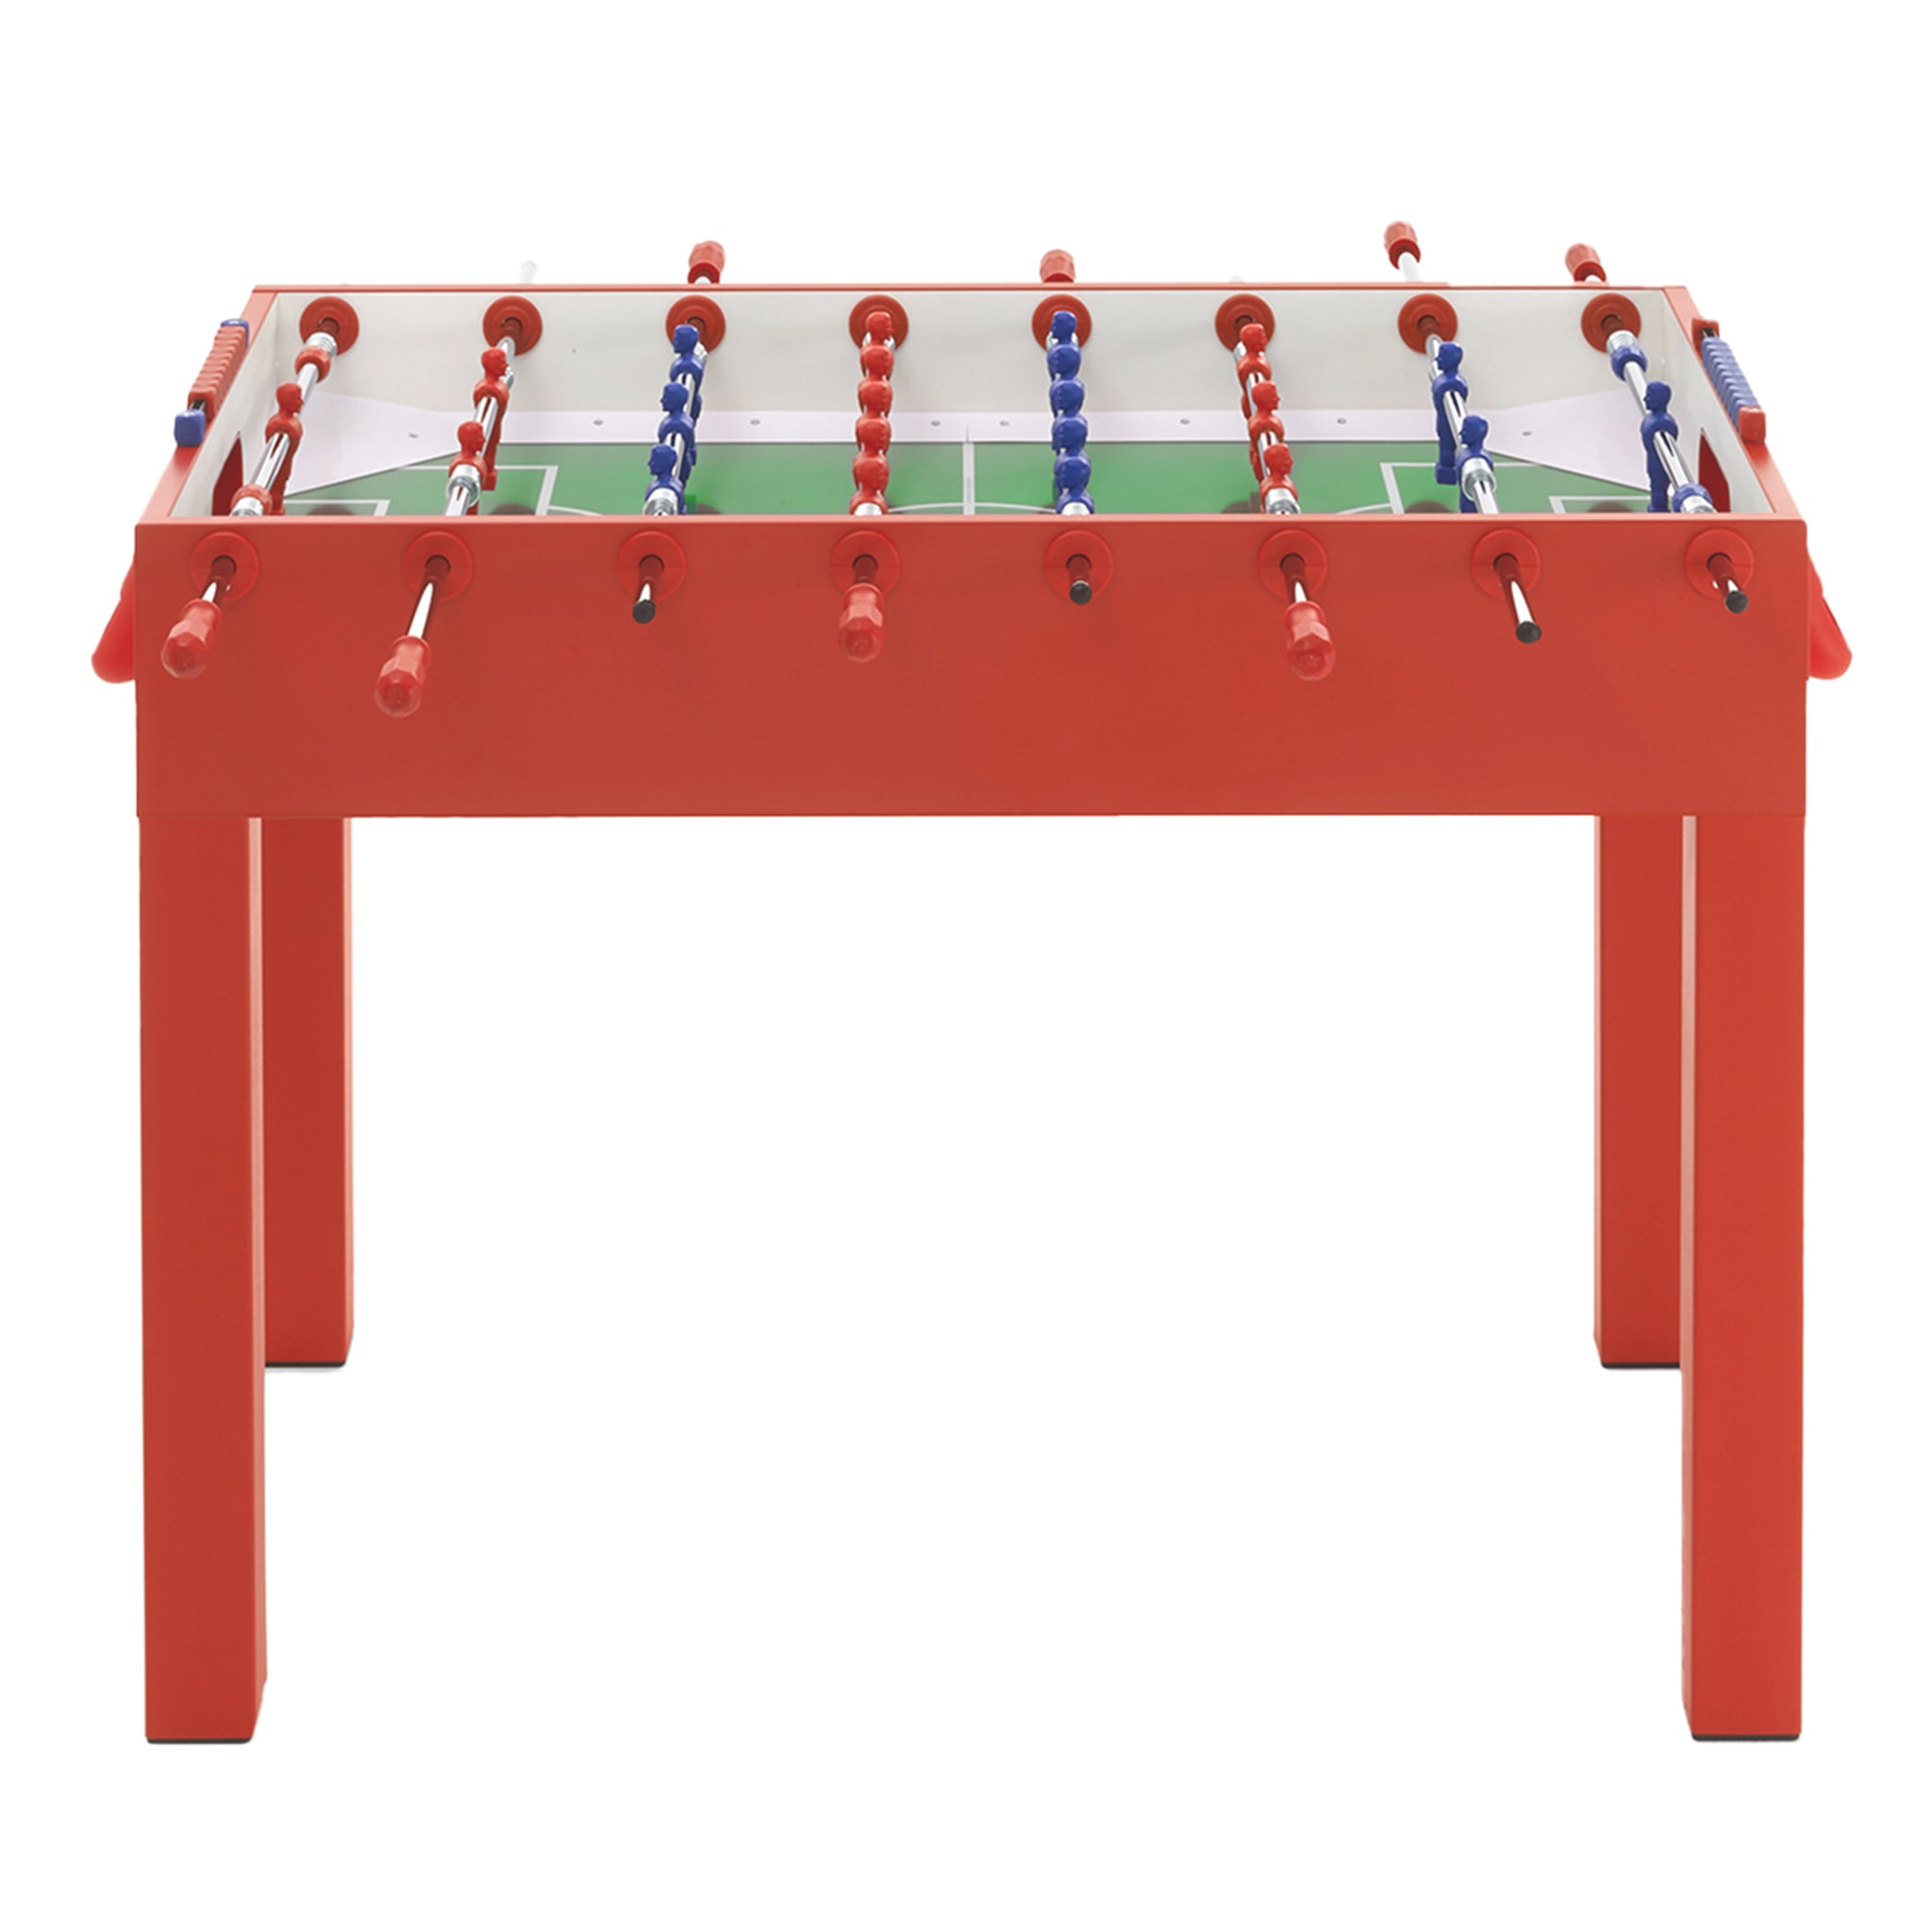 Fido Red Foosball Table by Basaglia + Rota Nodari - Main view